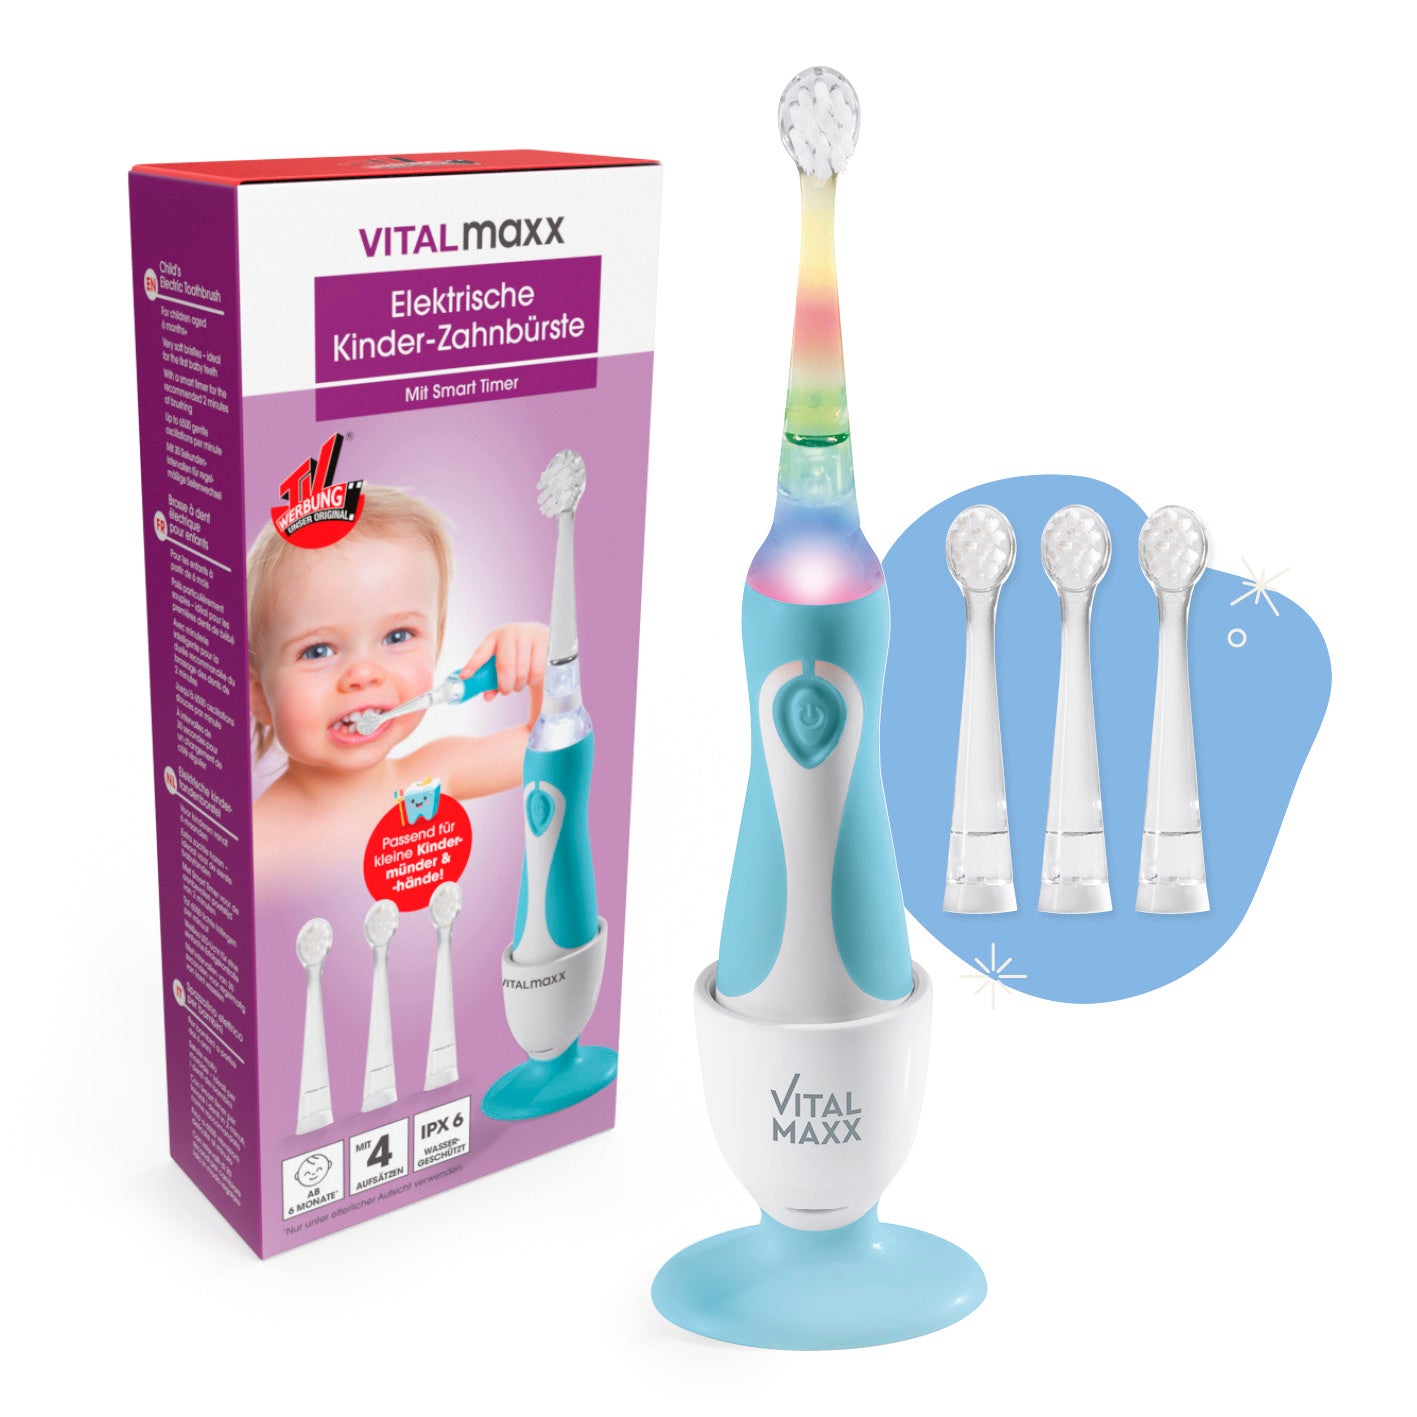 VITALmaxx Elektrische Kinder-Zahnbürste mit Smart Timer - Ab 6 Monate* - Blau/Weiß von VITALmaxx